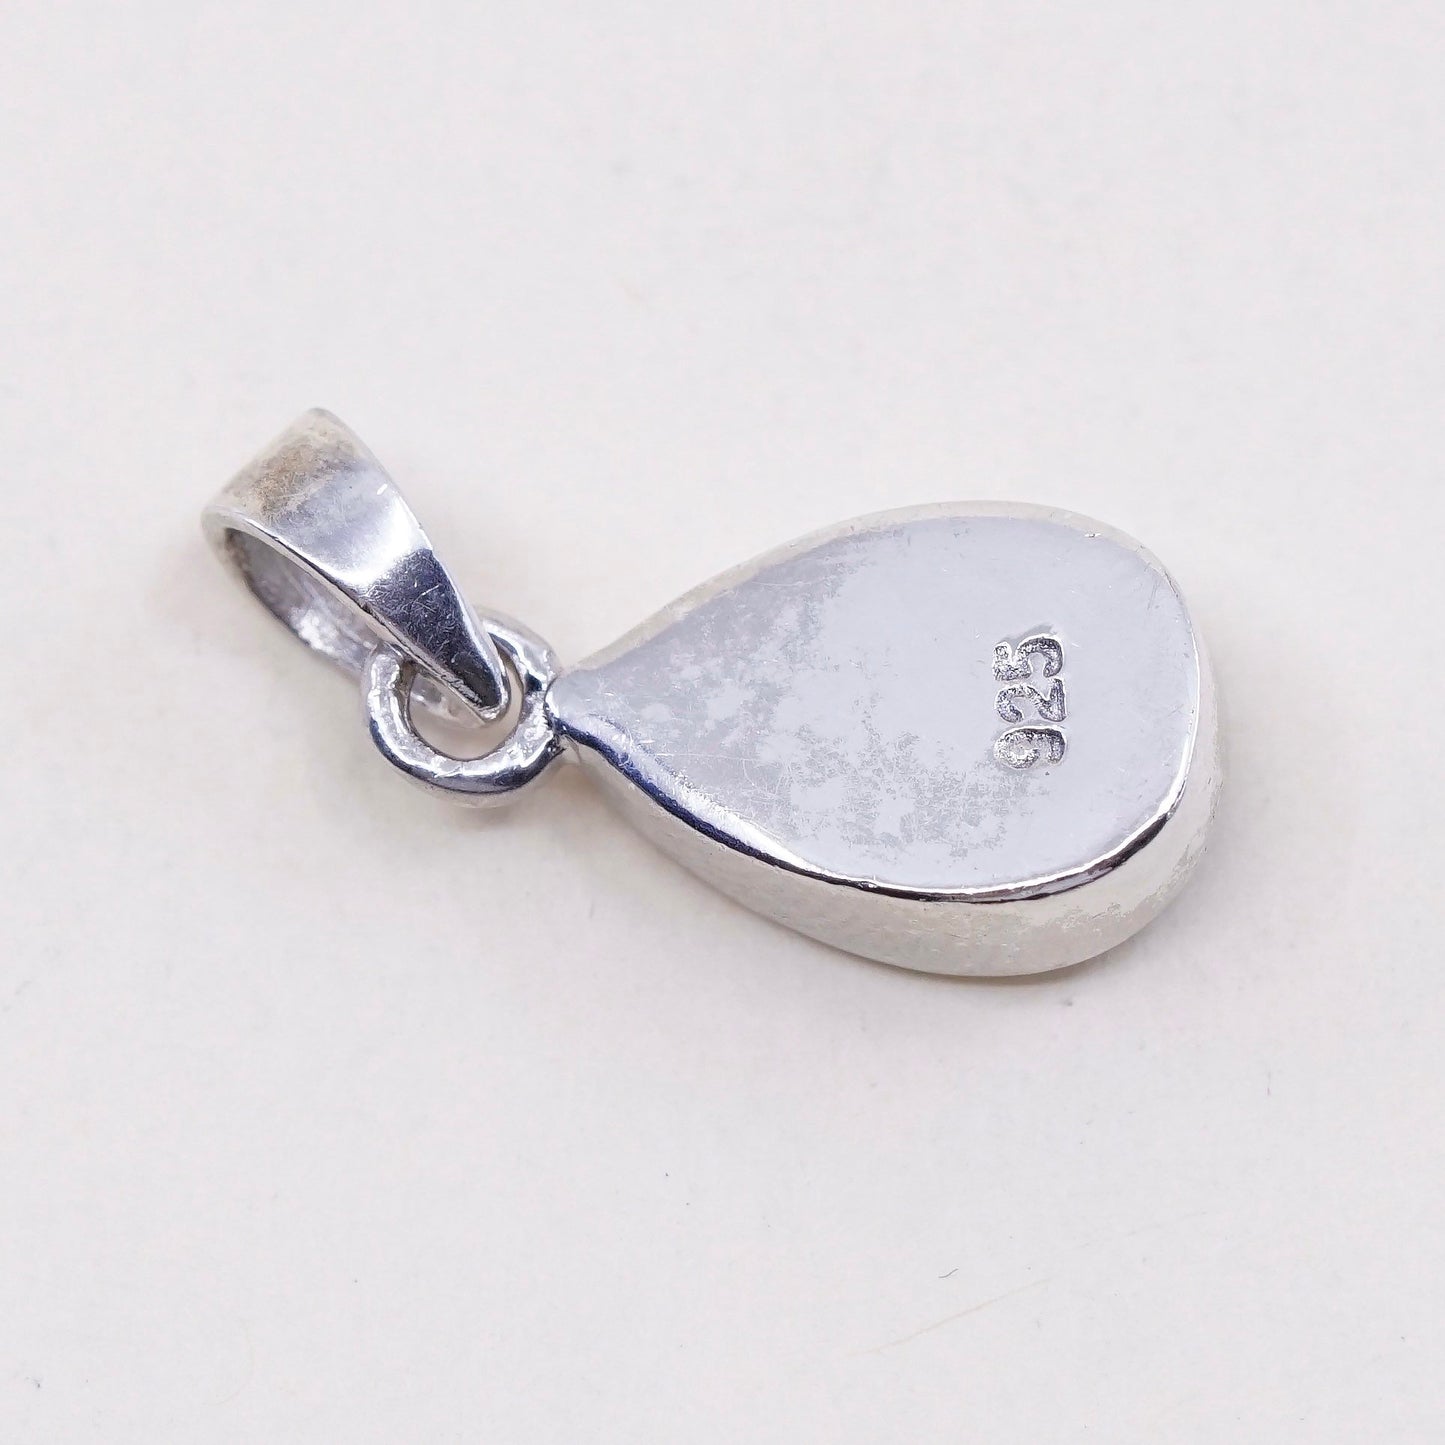 Vintage Sterling silver handmade pendant, 925 teardrop with opal